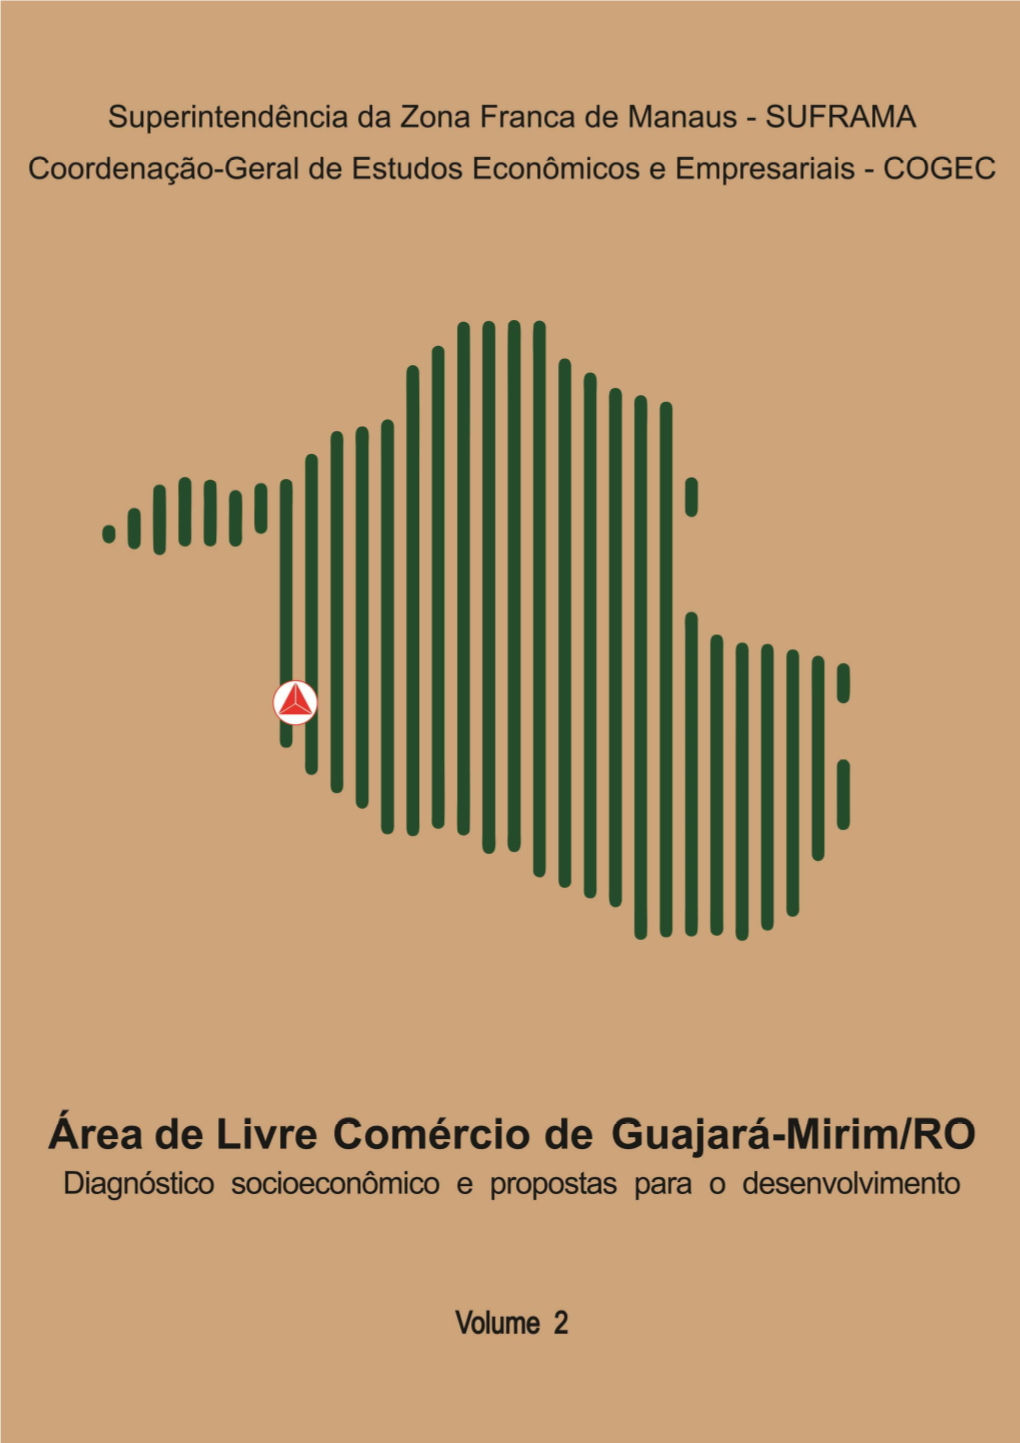 ALC Guajará-Mirim/RO